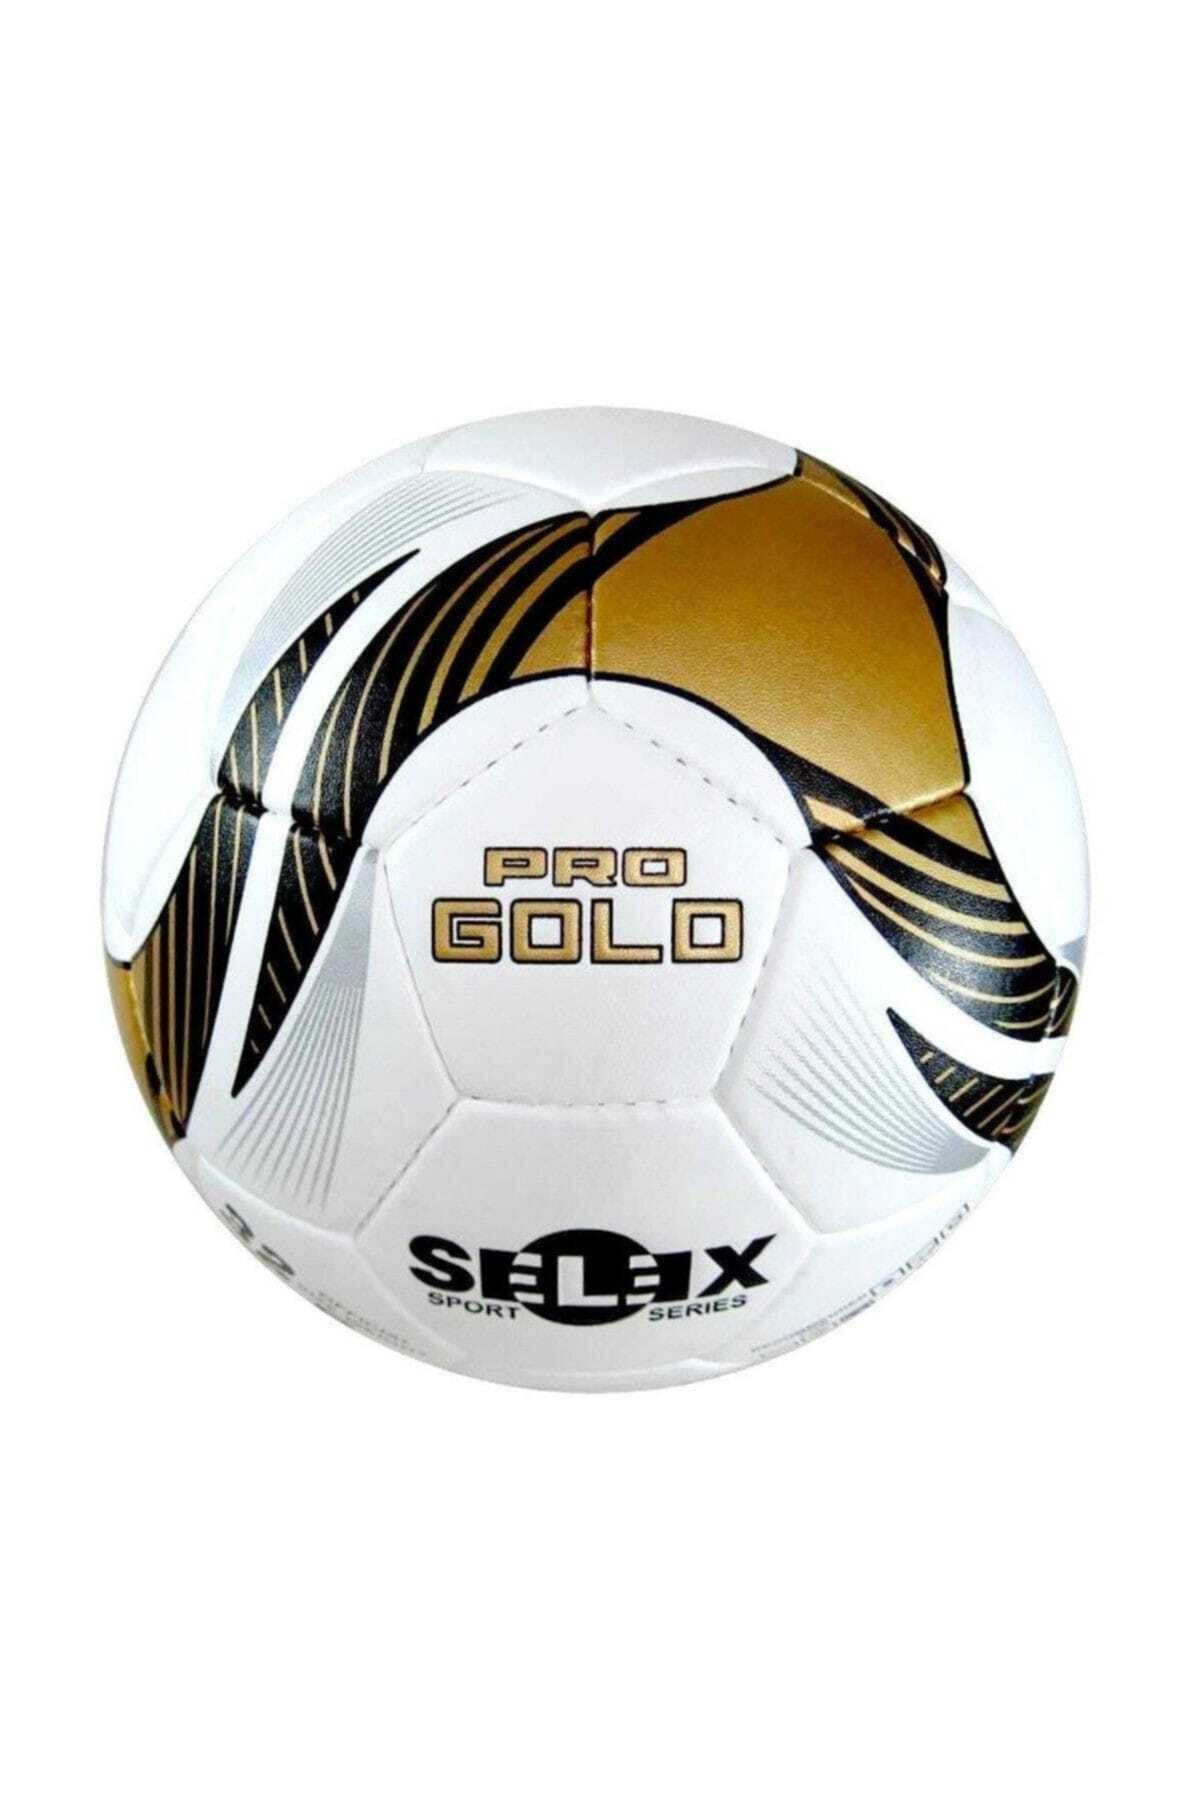 SELEX Top Futbol Selex Pro Gold